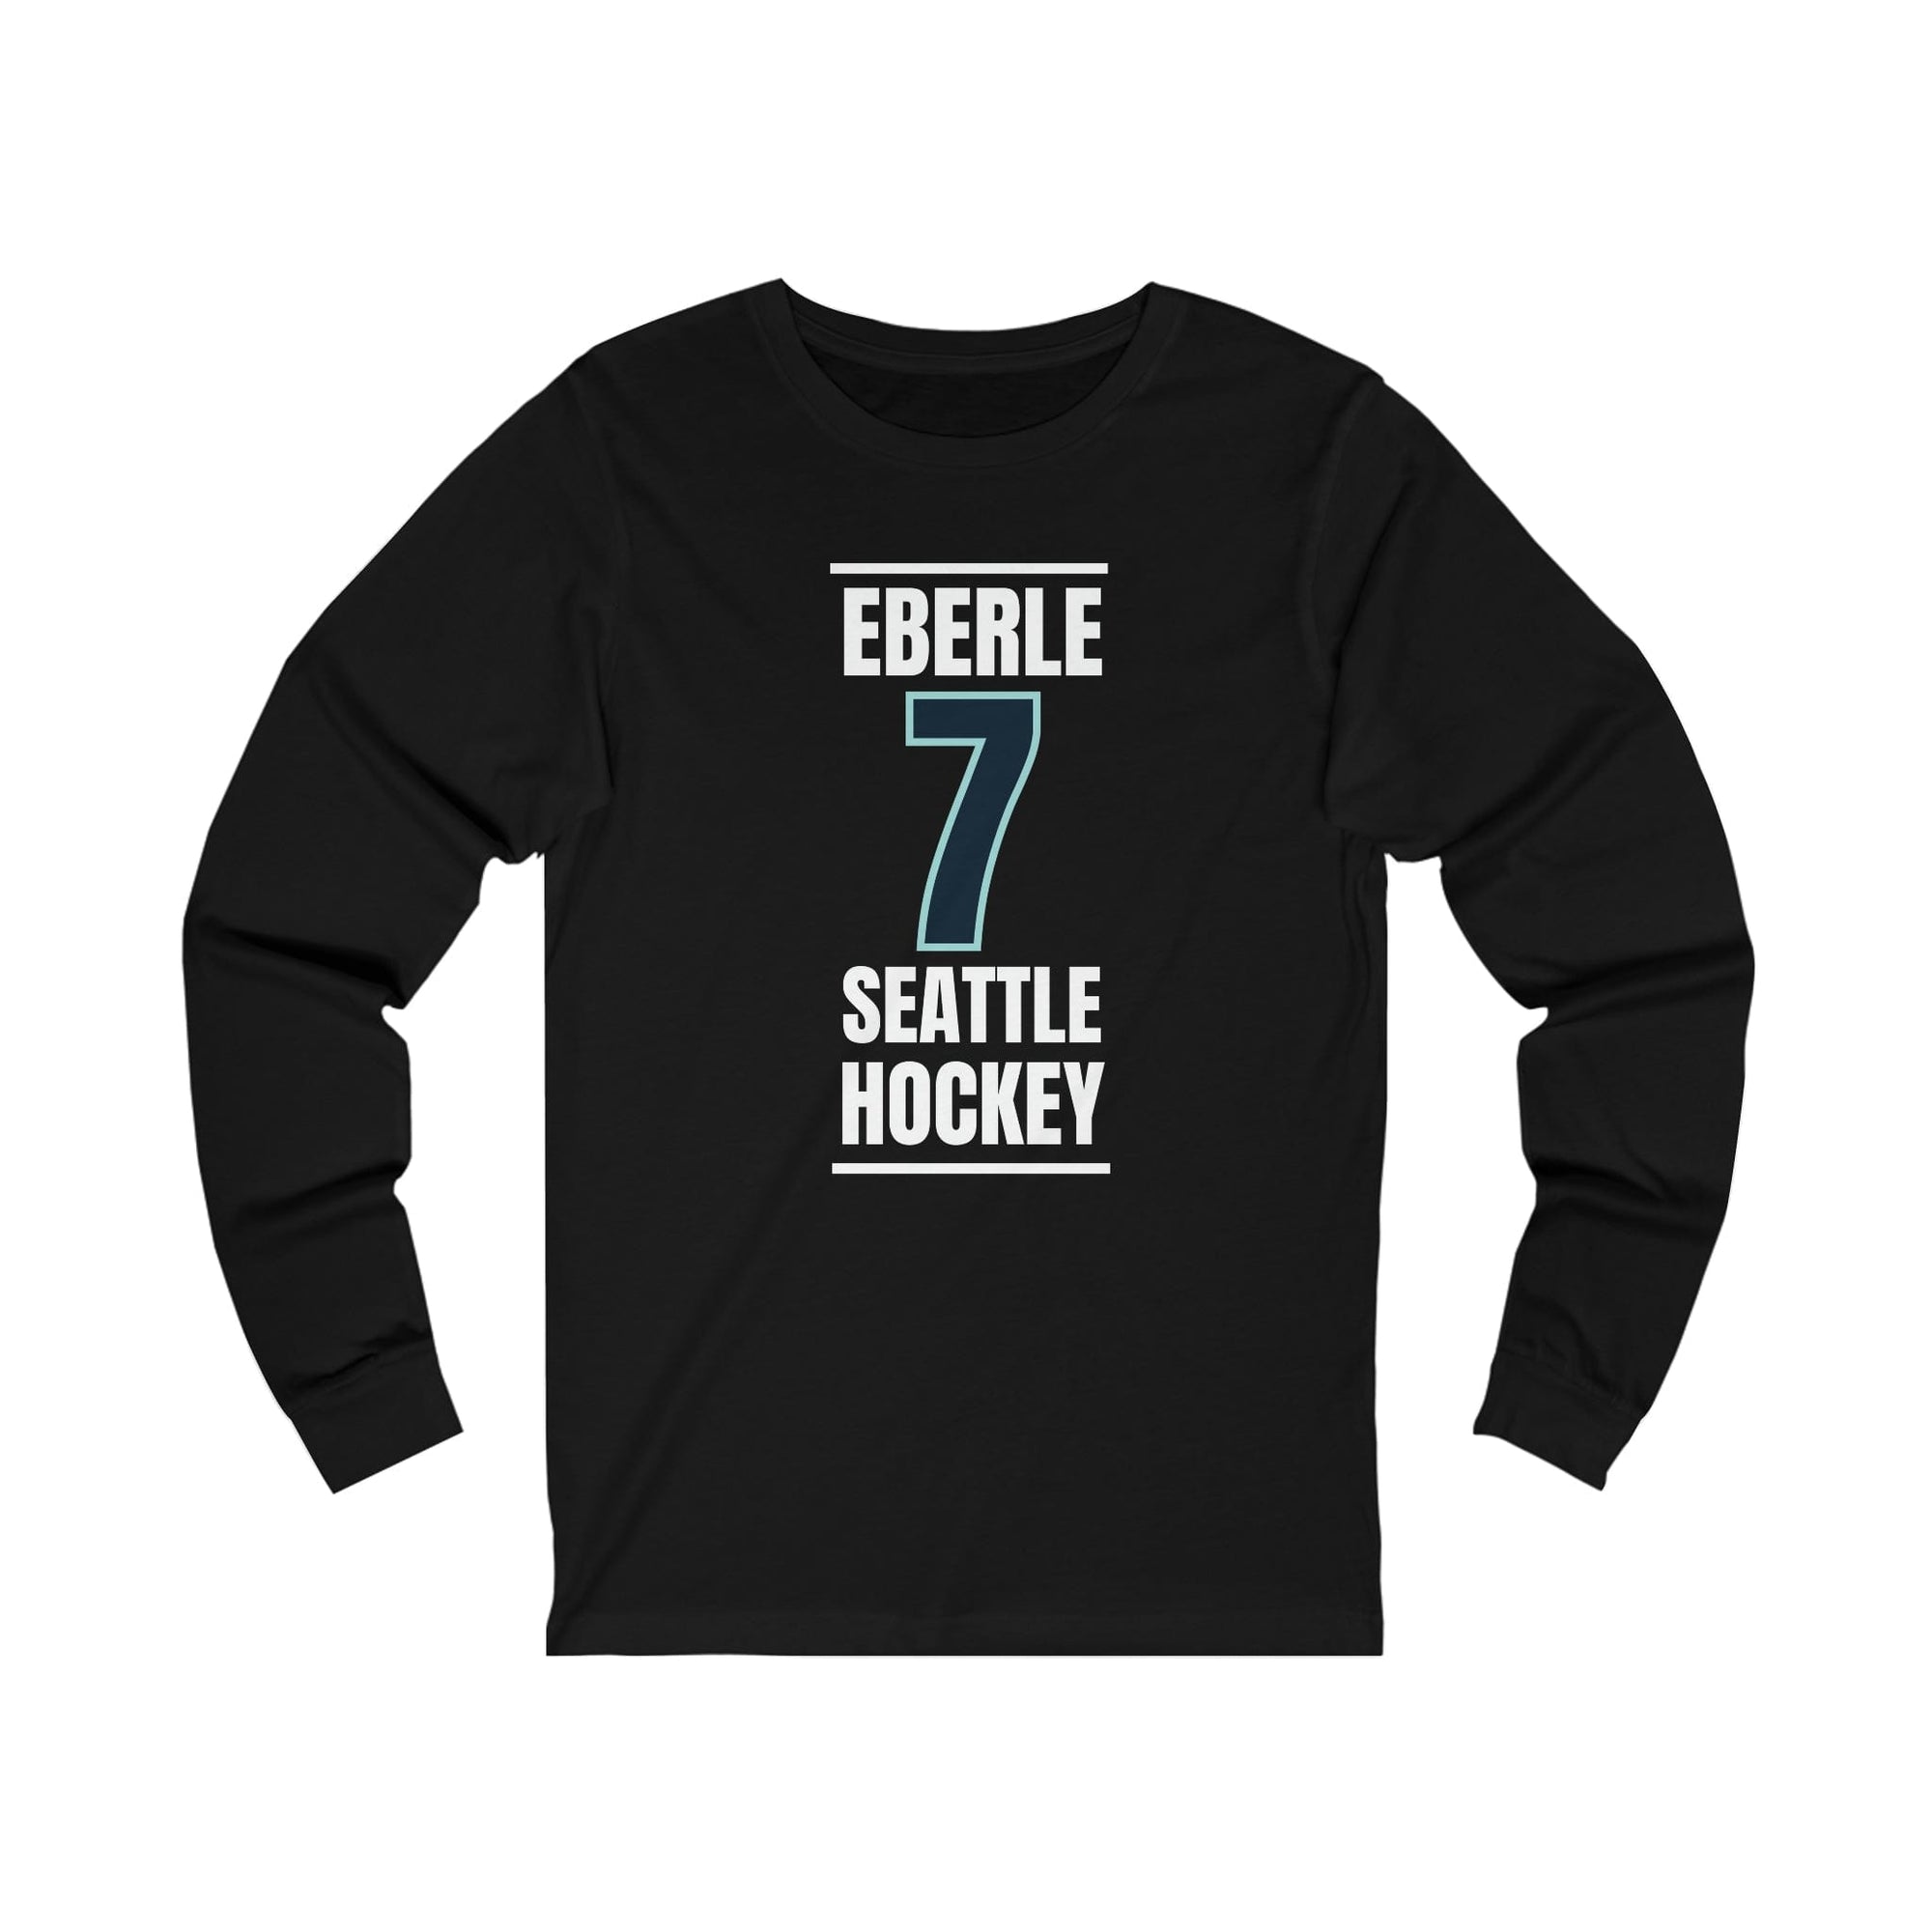 Long-sleeve Eberle 7 Seattle Hockey Black Vertical Design Unisex Jersey Long Sleeve Shirt